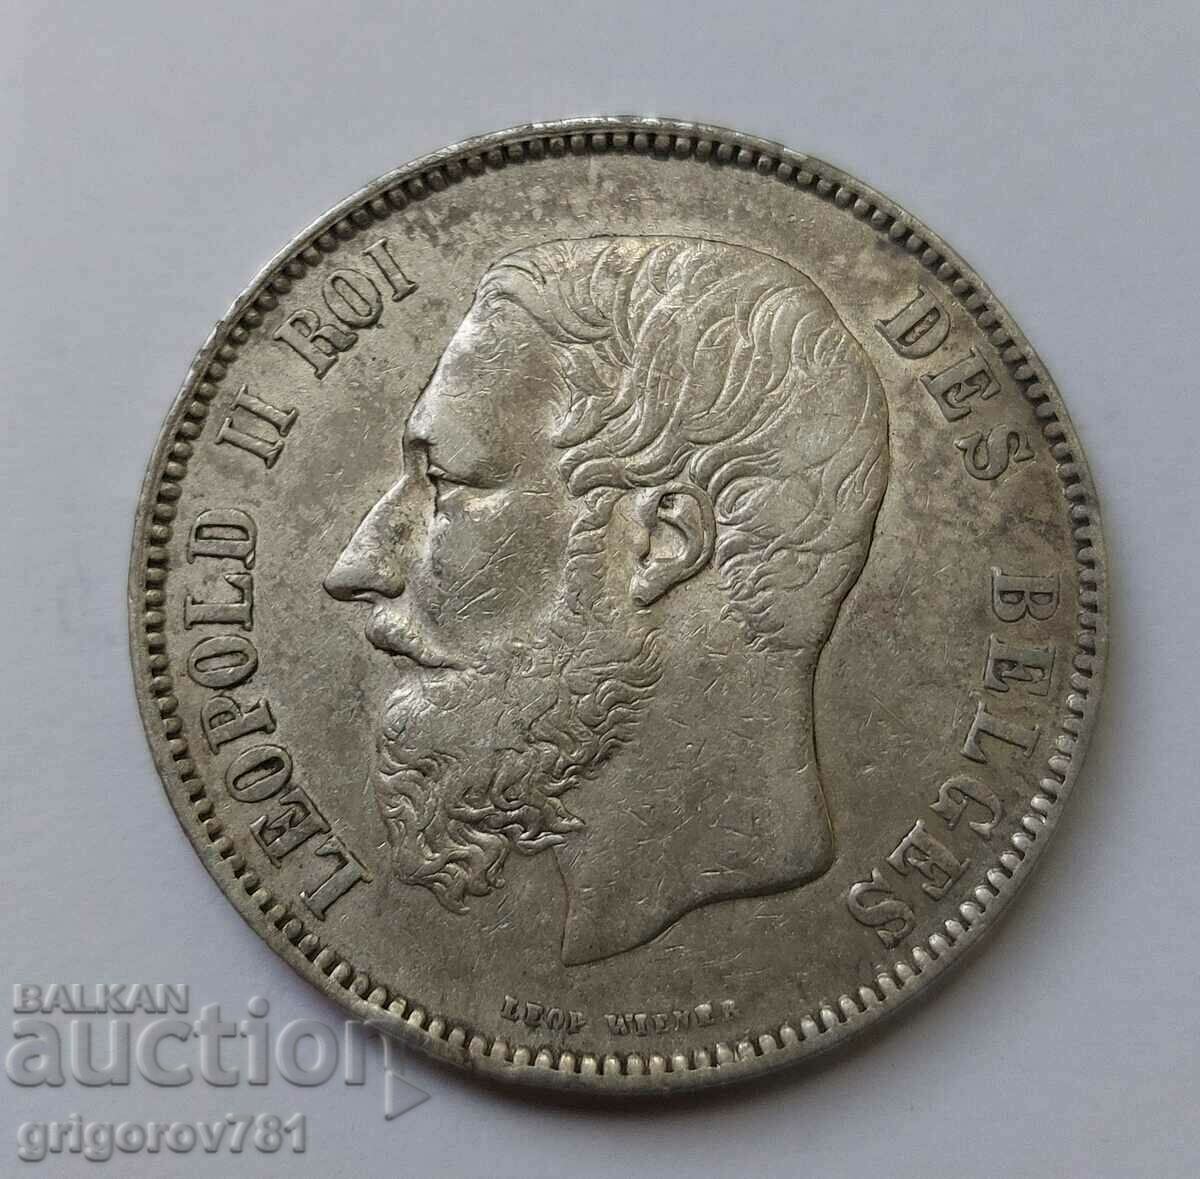 5 Franci Argint Belgia 1873 - Moneda de argint #104